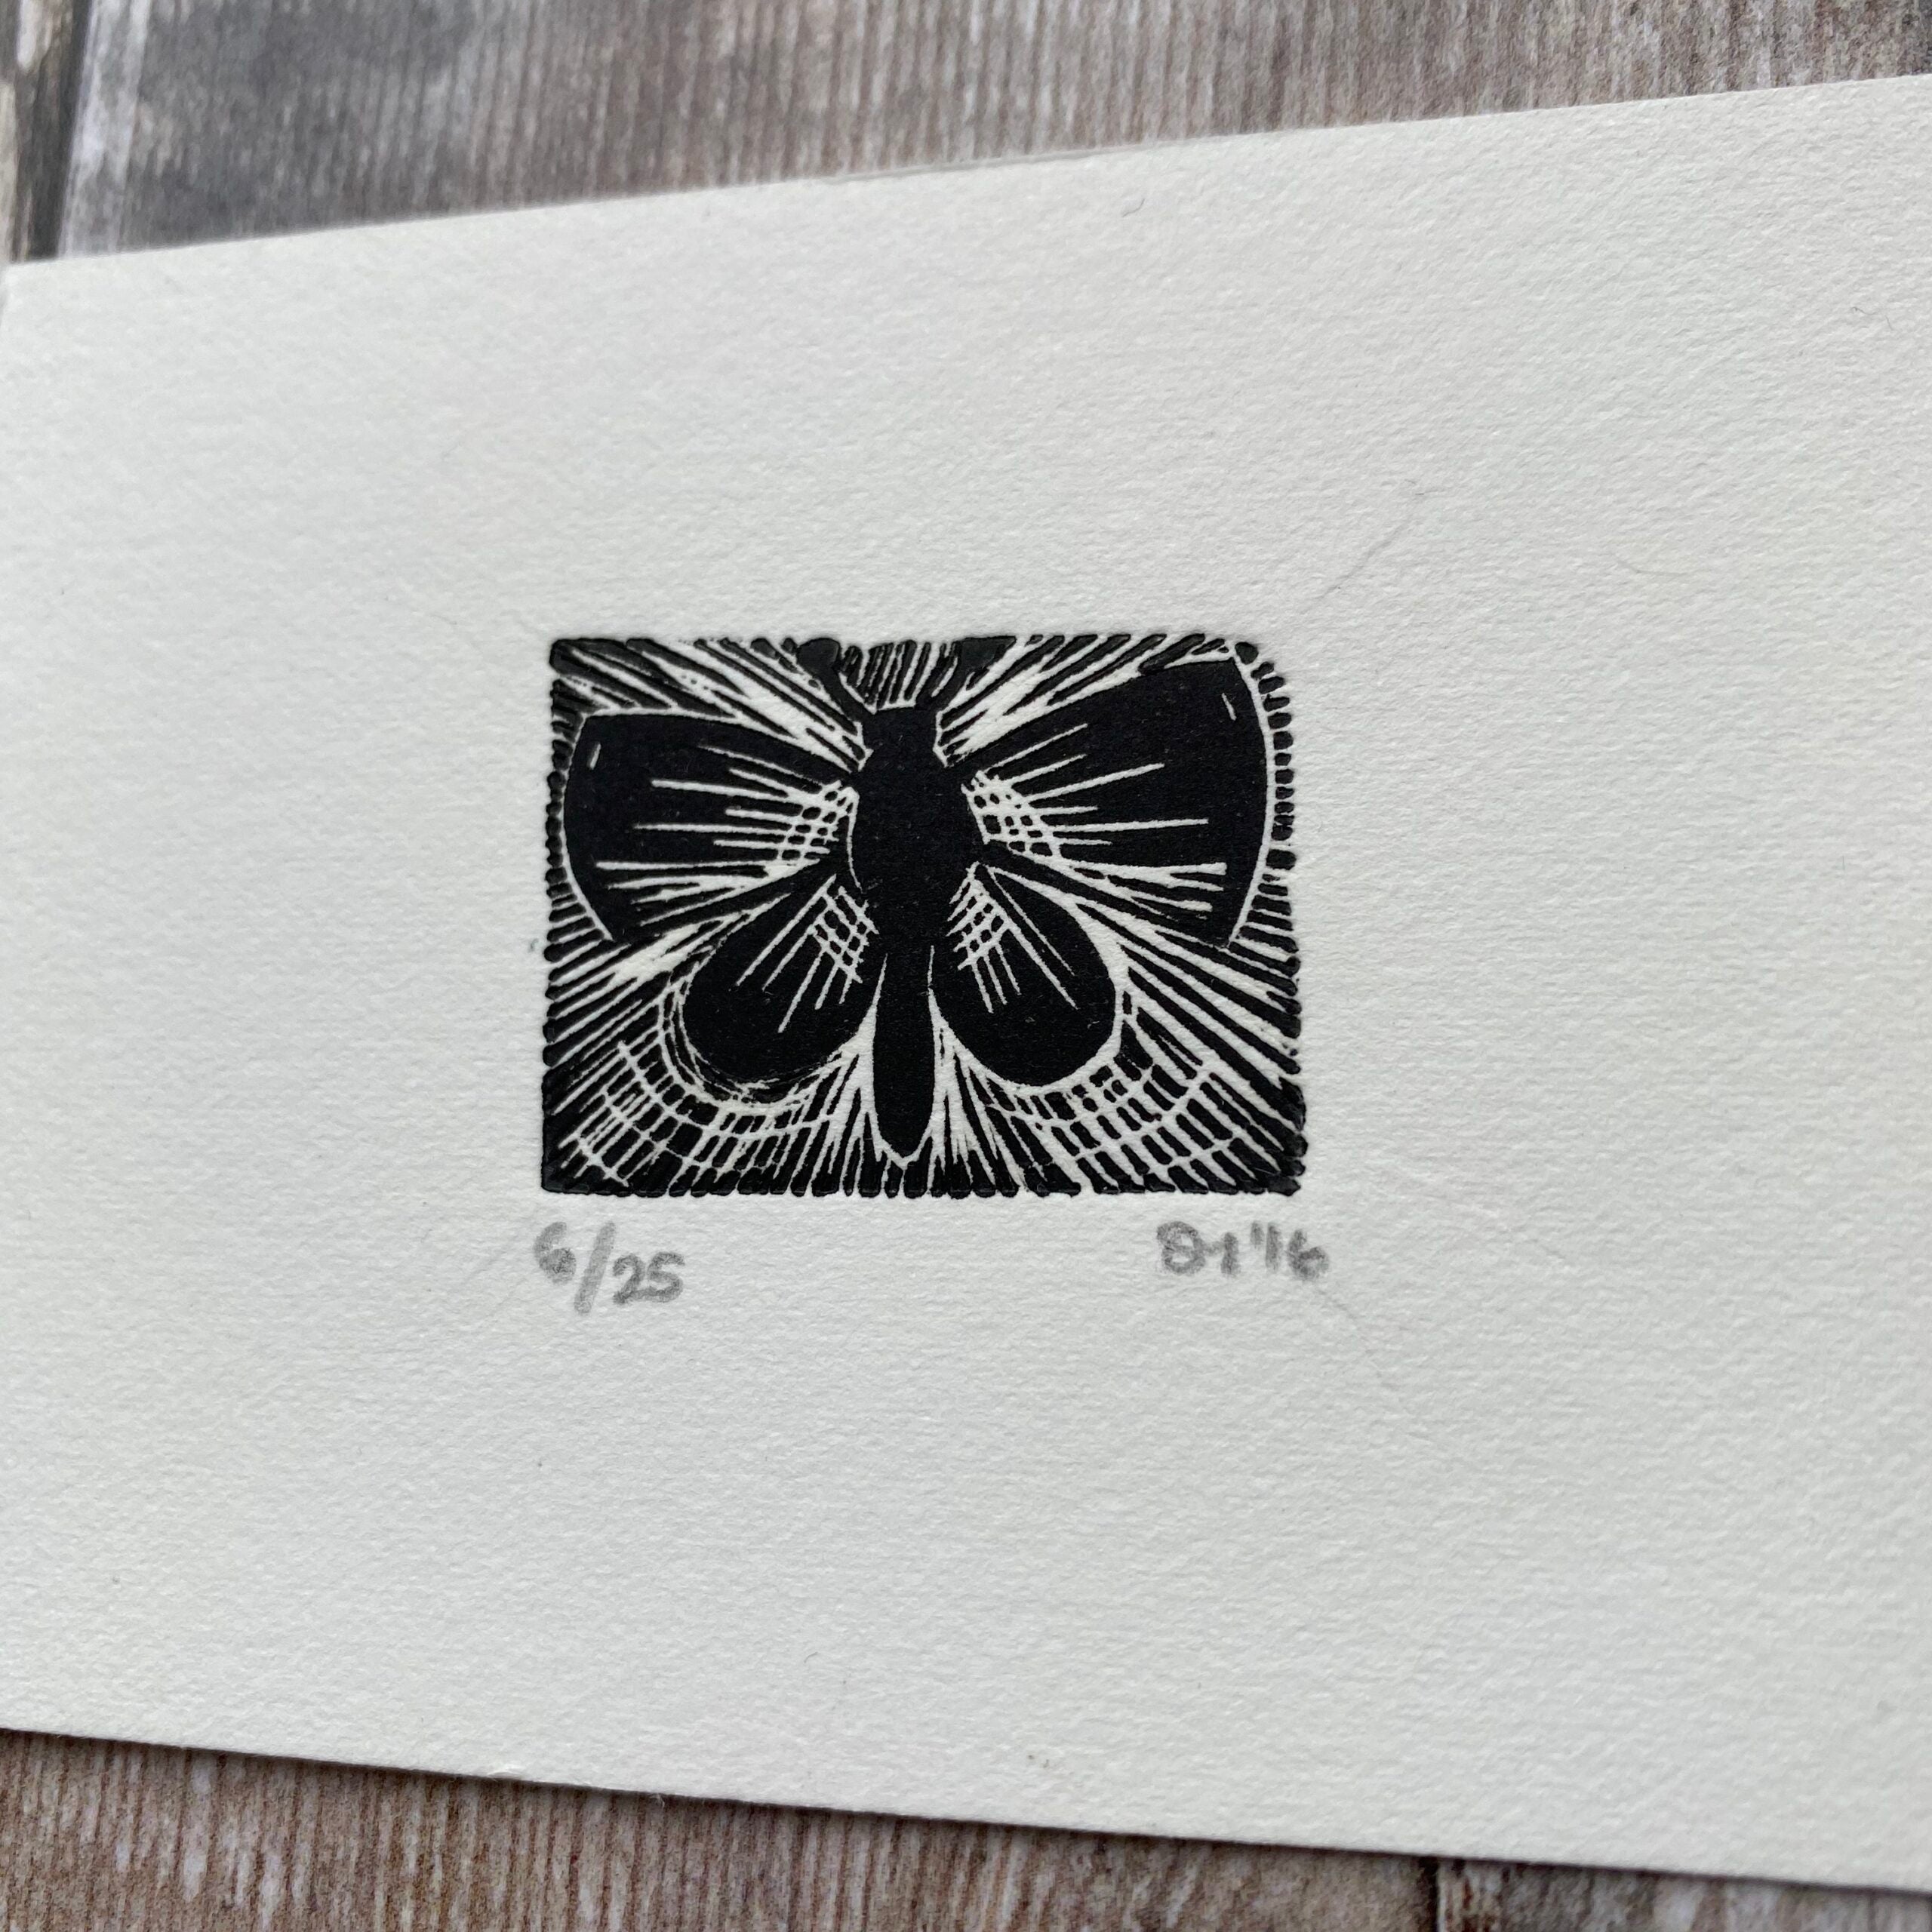 SALE - Mini Butterfly - Original Wood Engraving